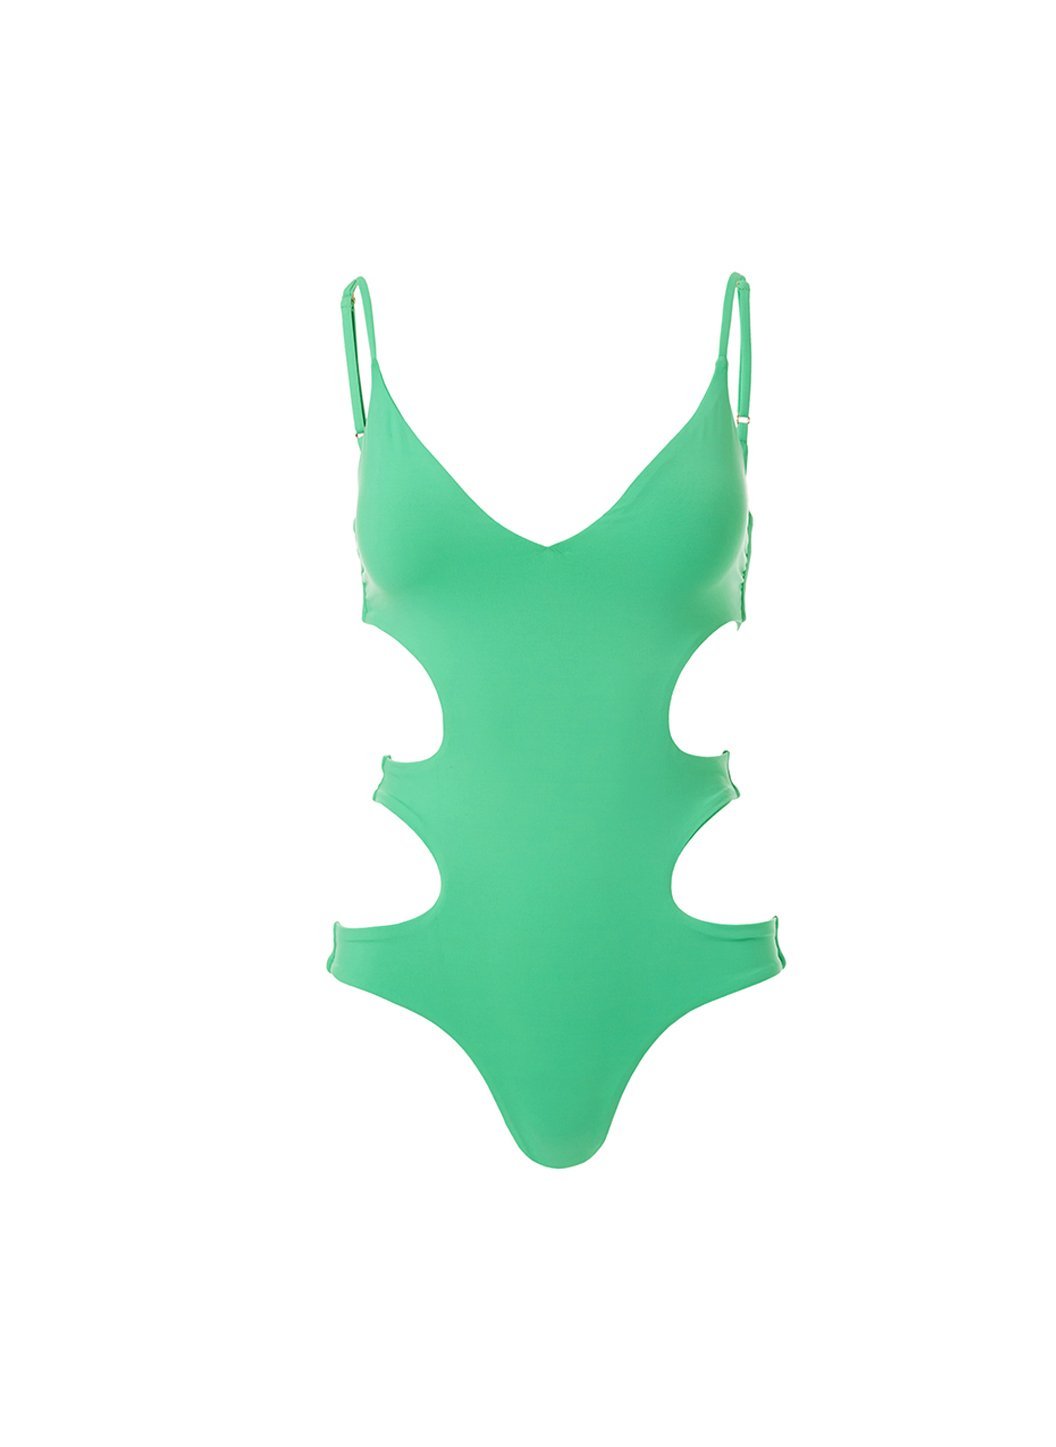 santorini green overtheshoulder cutout onepiece swimsuit 2019